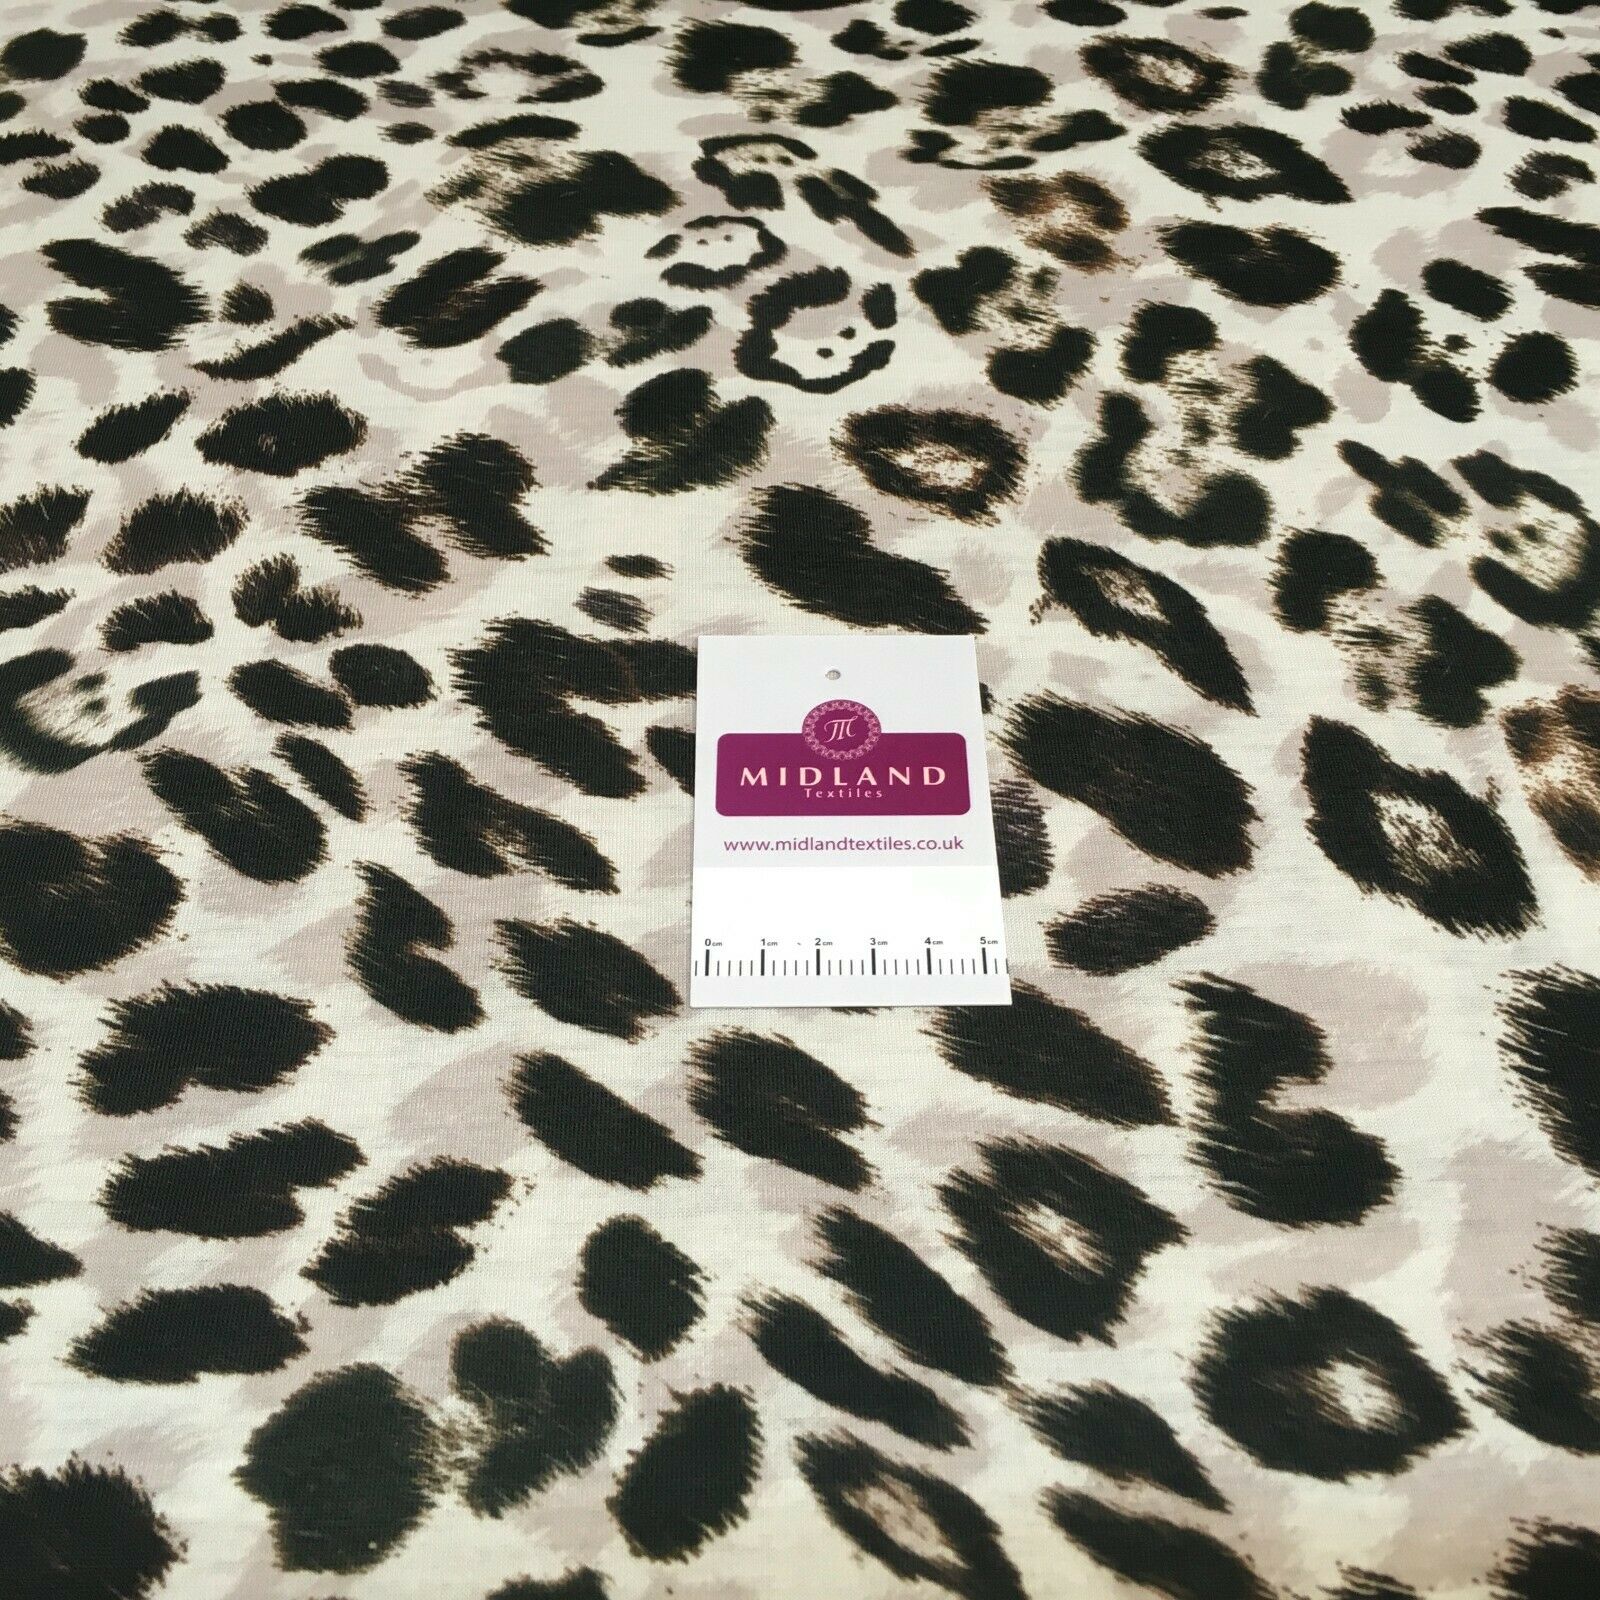 Natural Brown Animal Leopard Print 2 Way stretch Jersey dress Fabric M1522